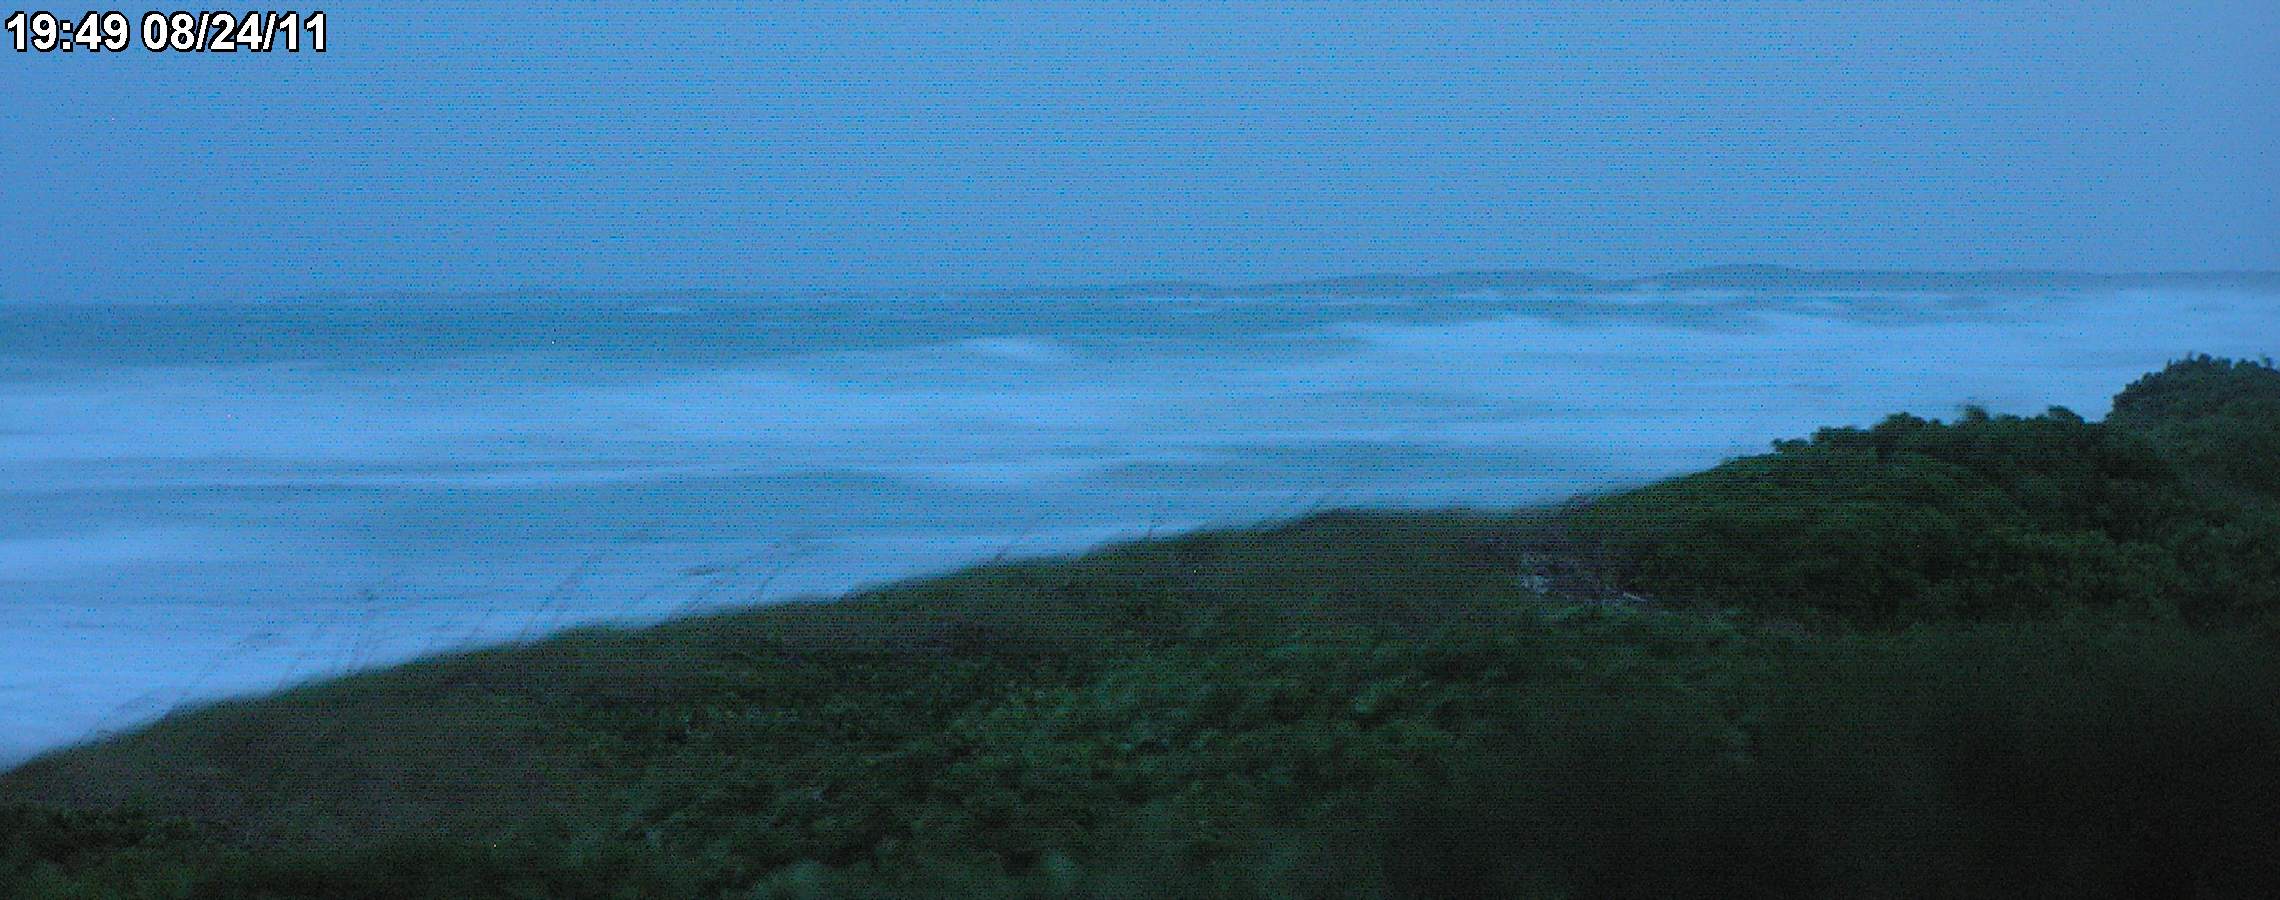 Rocky Bay (Abaco Island, Bahamas) Webcam Recording During Hurricane Irene (2011)